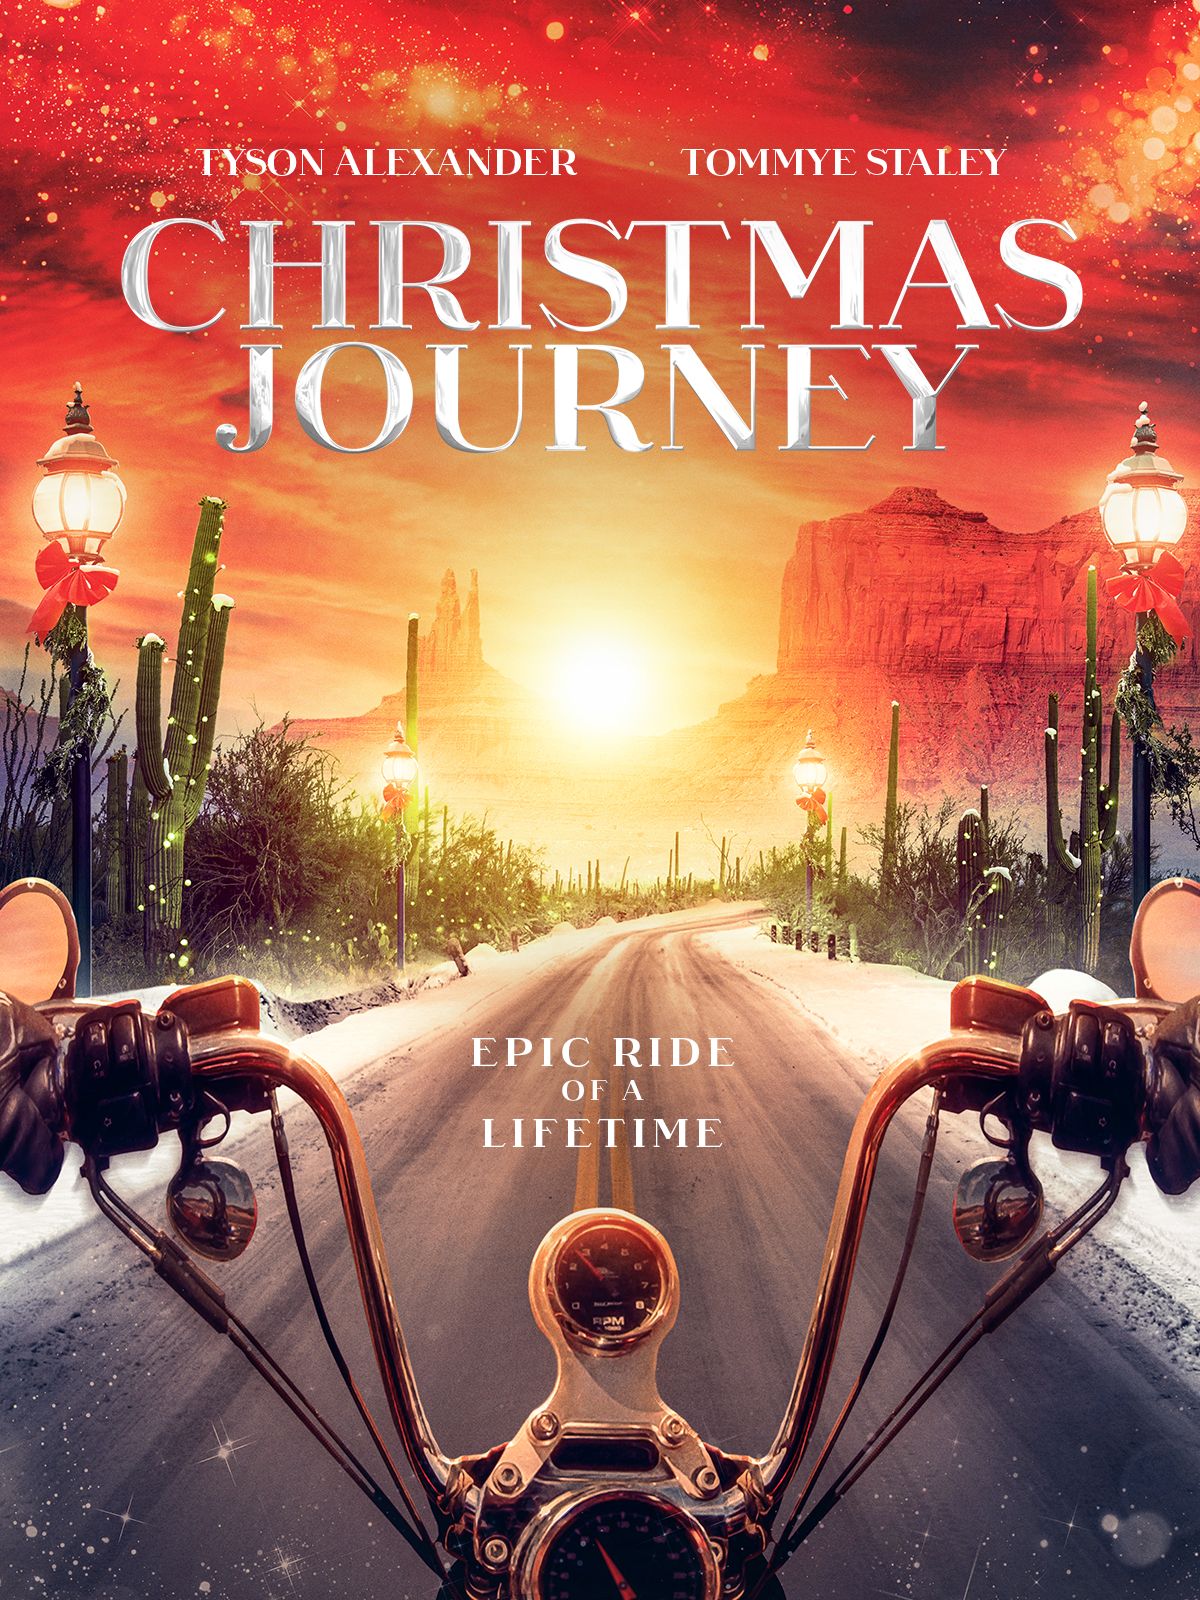 Keyart for the movie Christmas Journey